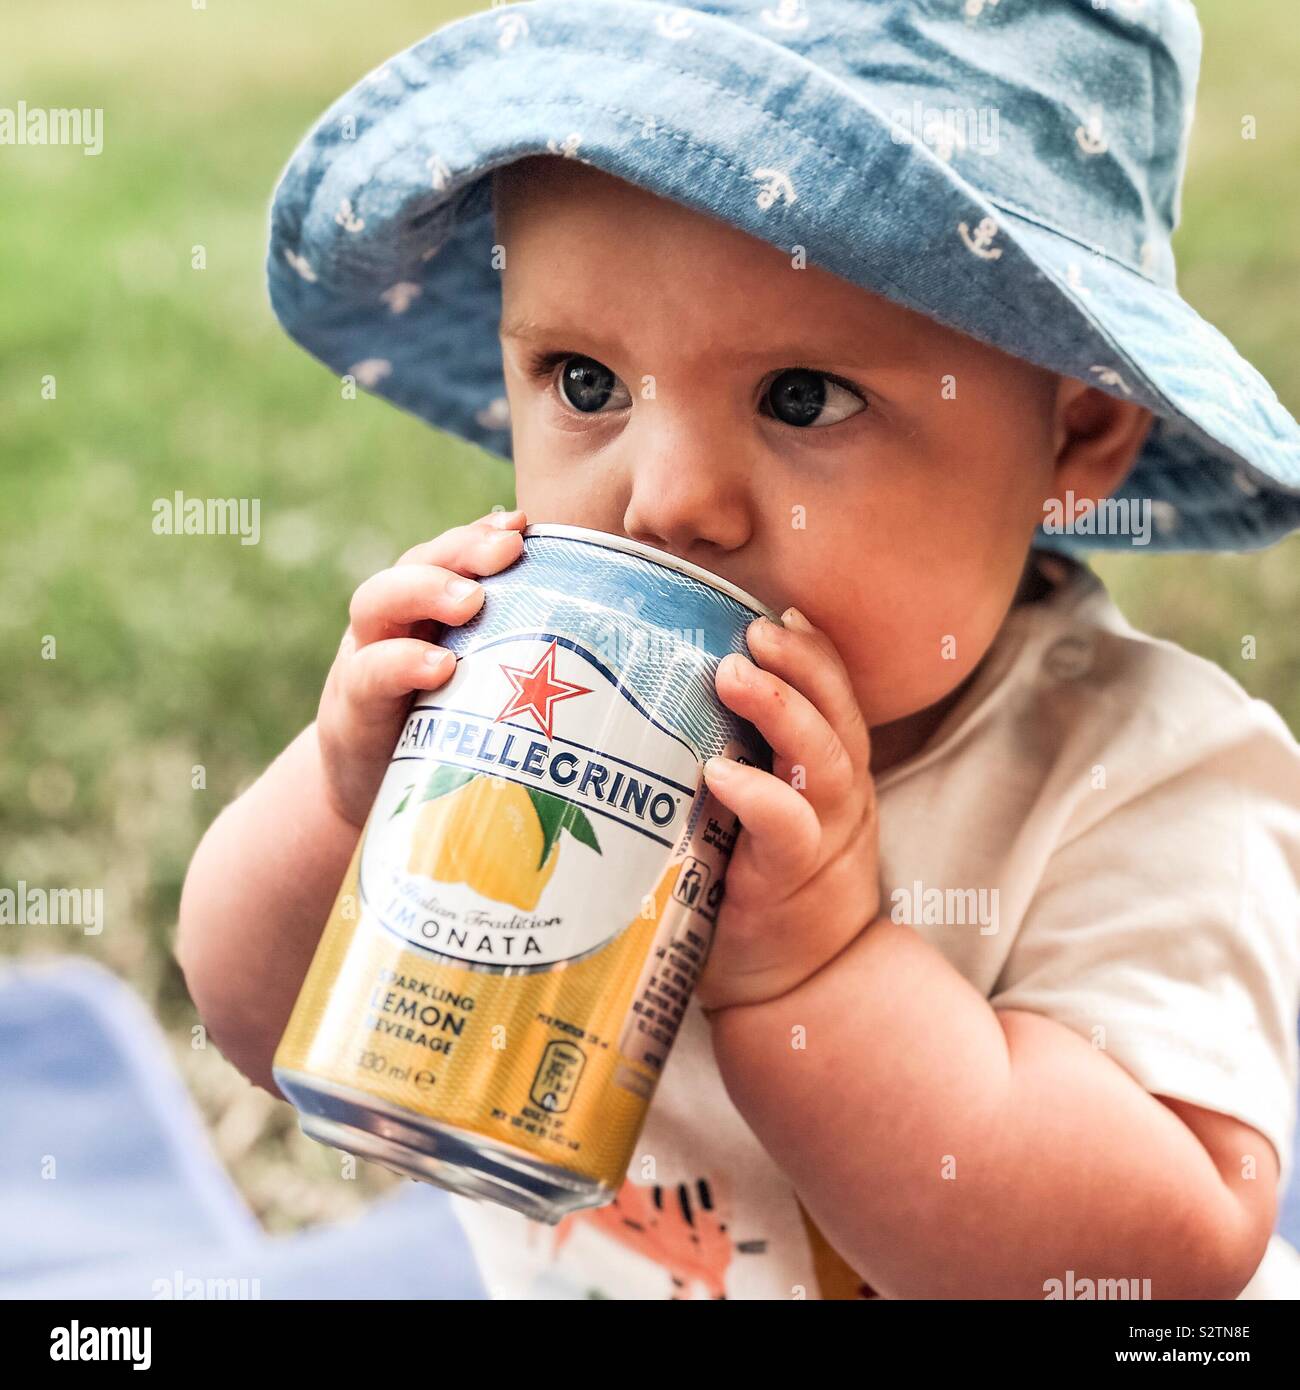 Baby boy, in the summer, drinking sanpellegrino lemonade can wearing a blue hat Stock Photo